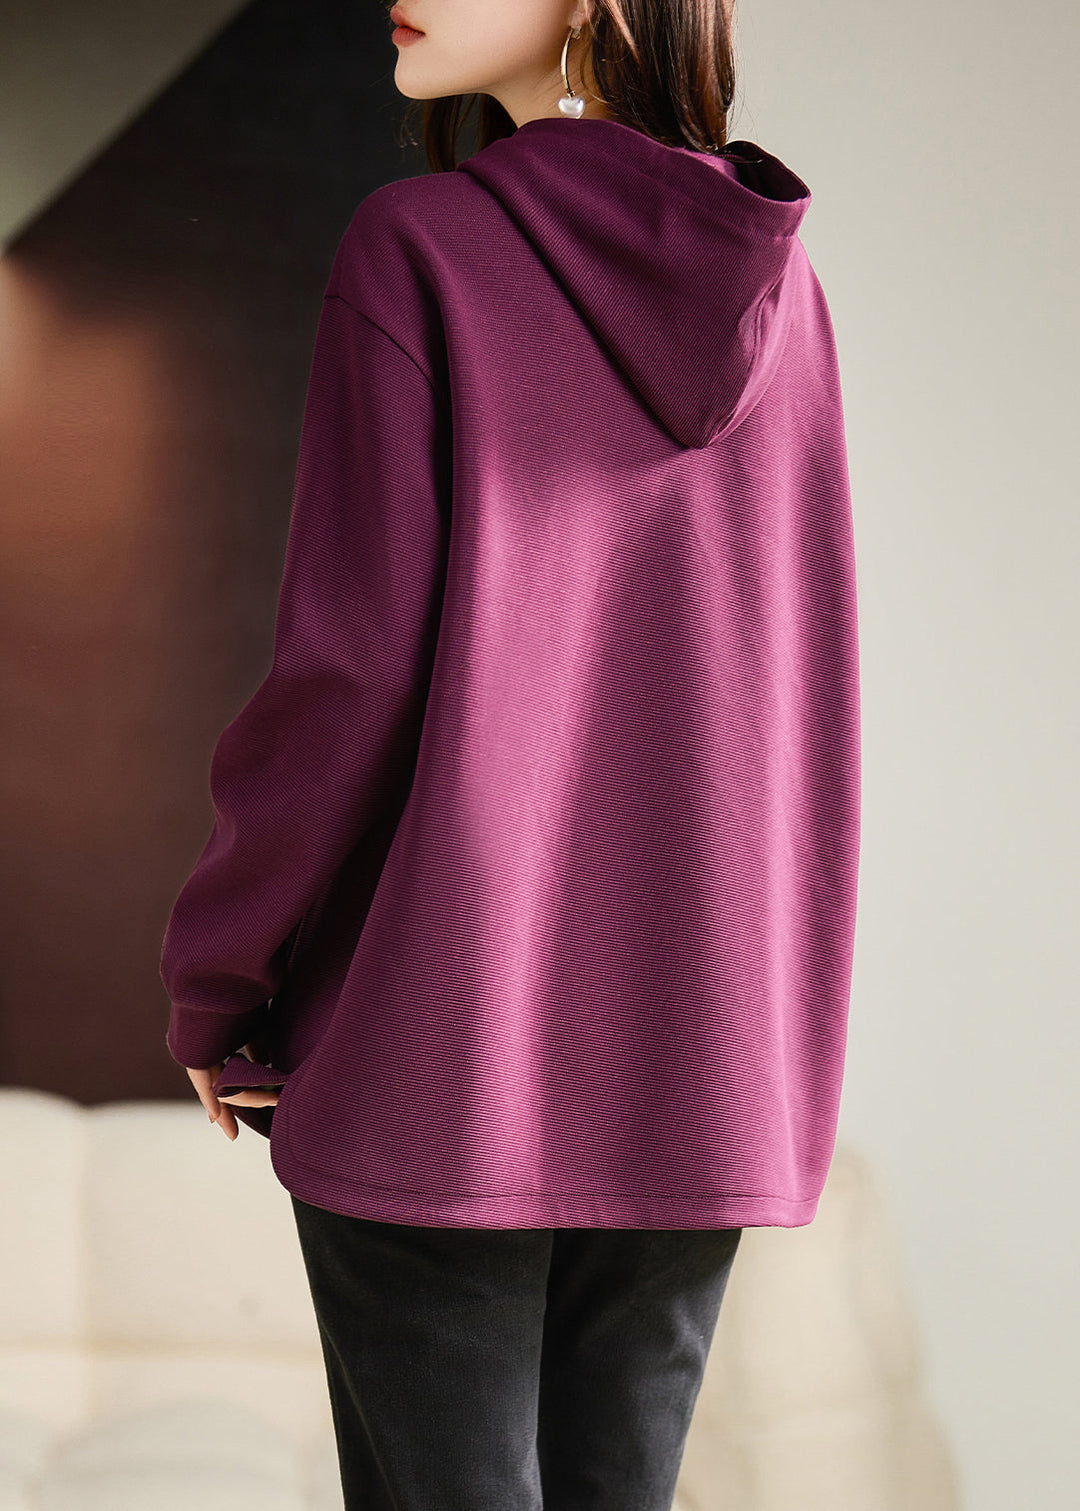 Handmade Purple Hooded Cotton Loose Sweatshirts Top Spring